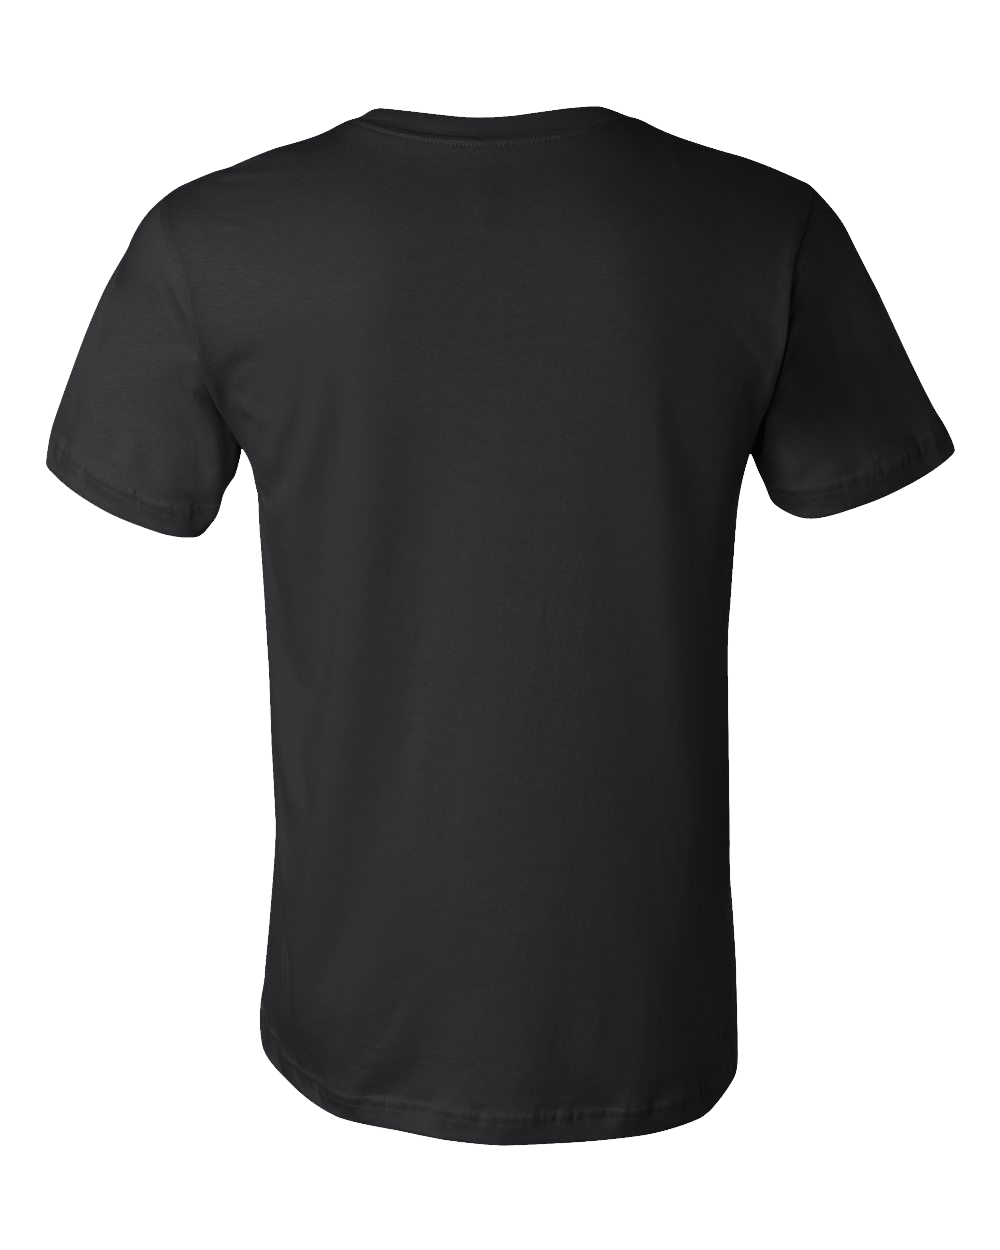 Standard Black Anniston, AL | Retro, Vintage Style Alabama Pride  T-shirt